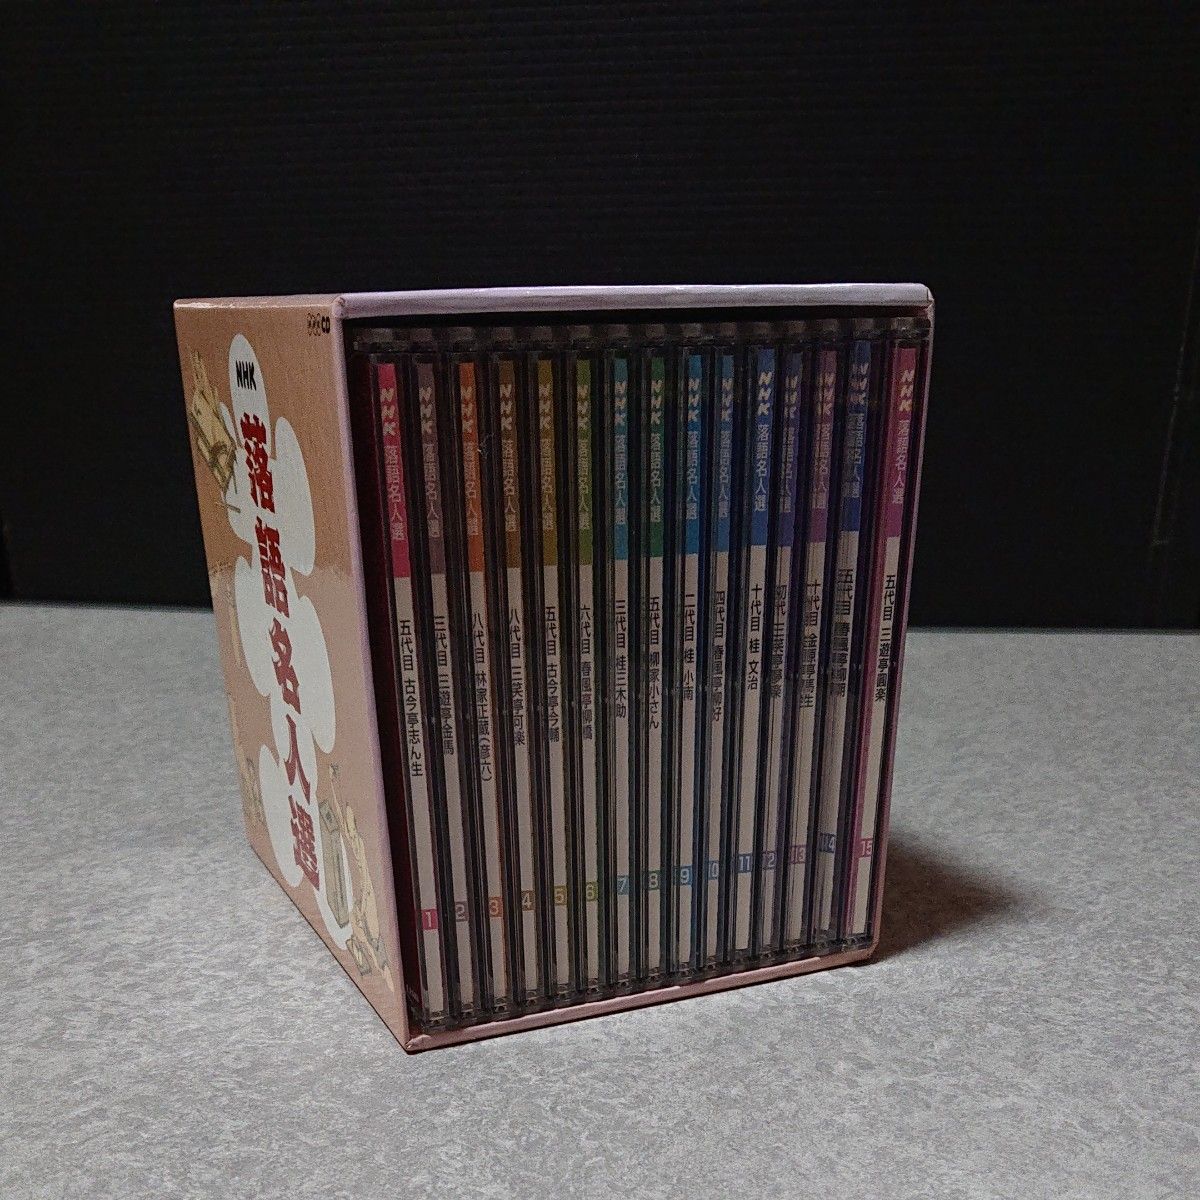 NHK 落語名人選 CD 15枚セット(解説書なし)